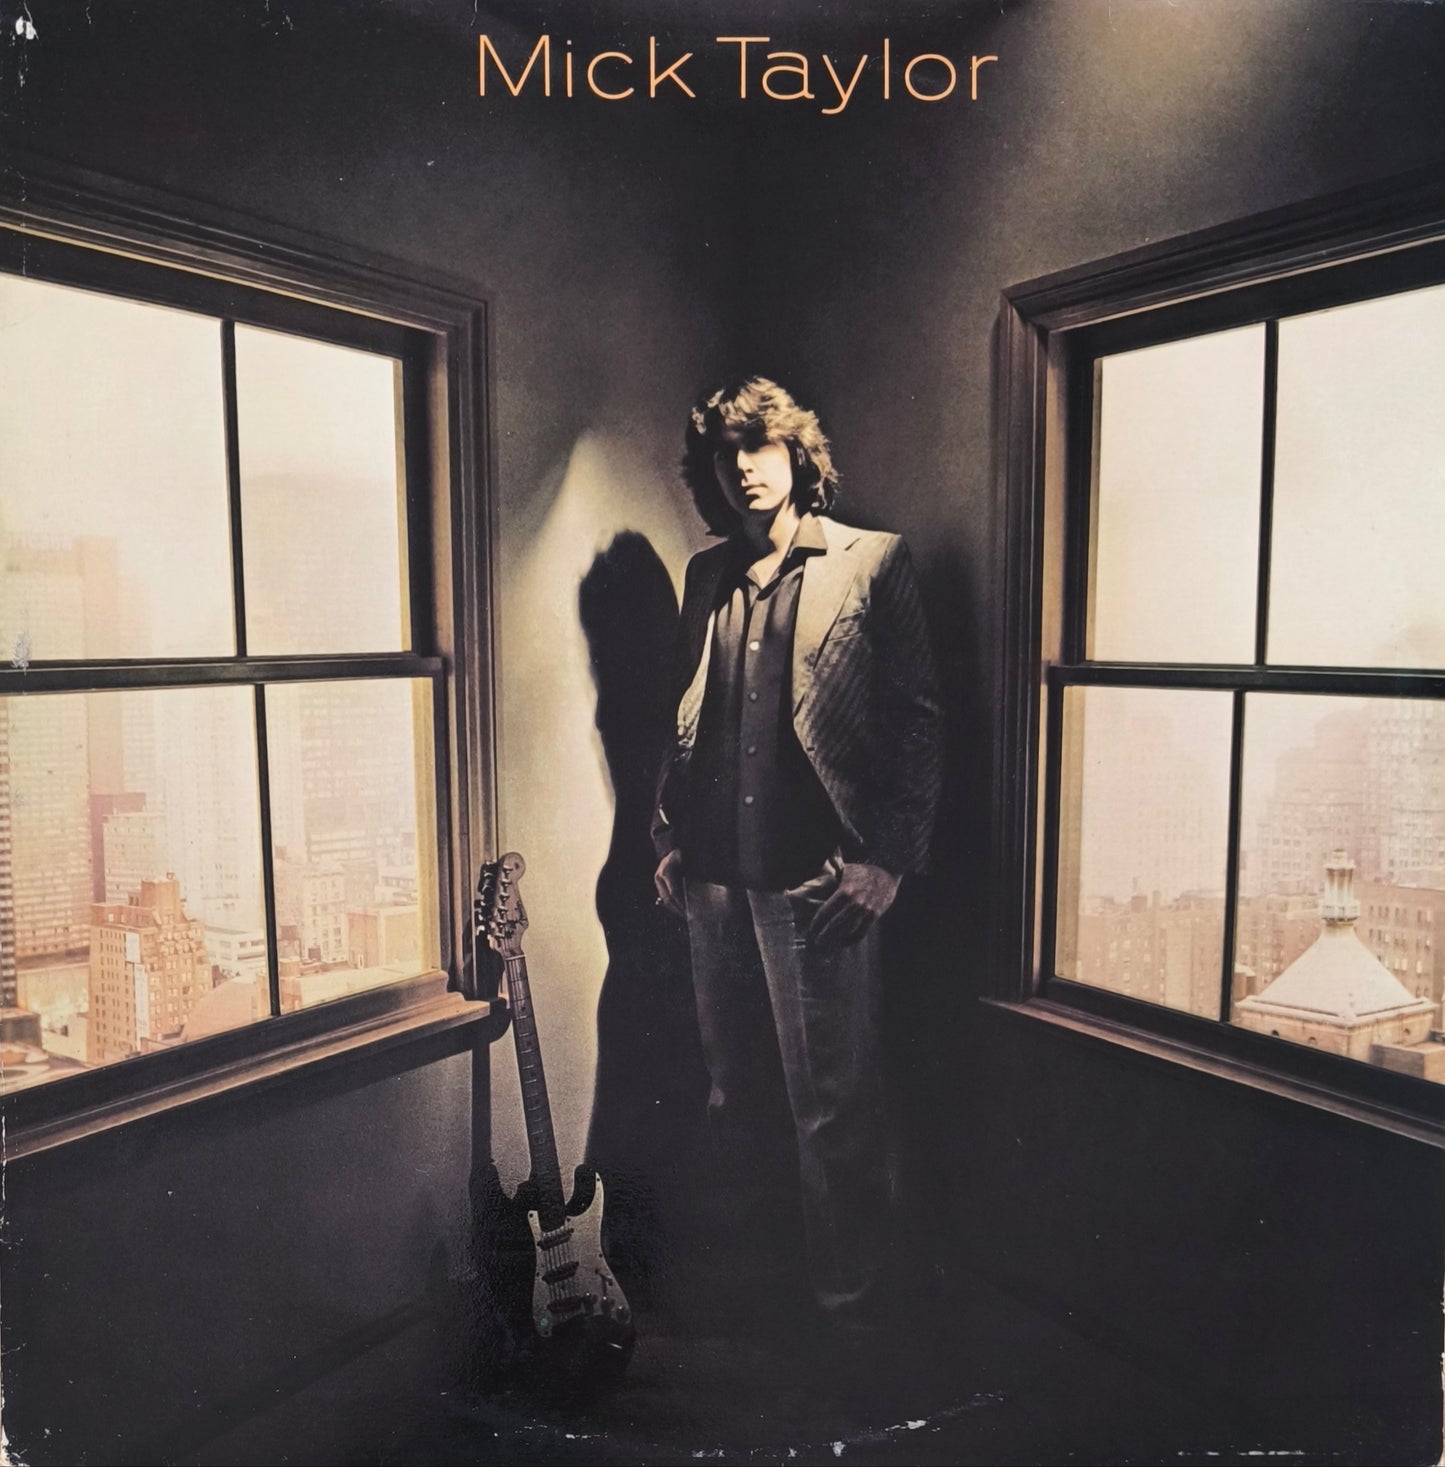 MICK TAYLOR - Mick Taylor